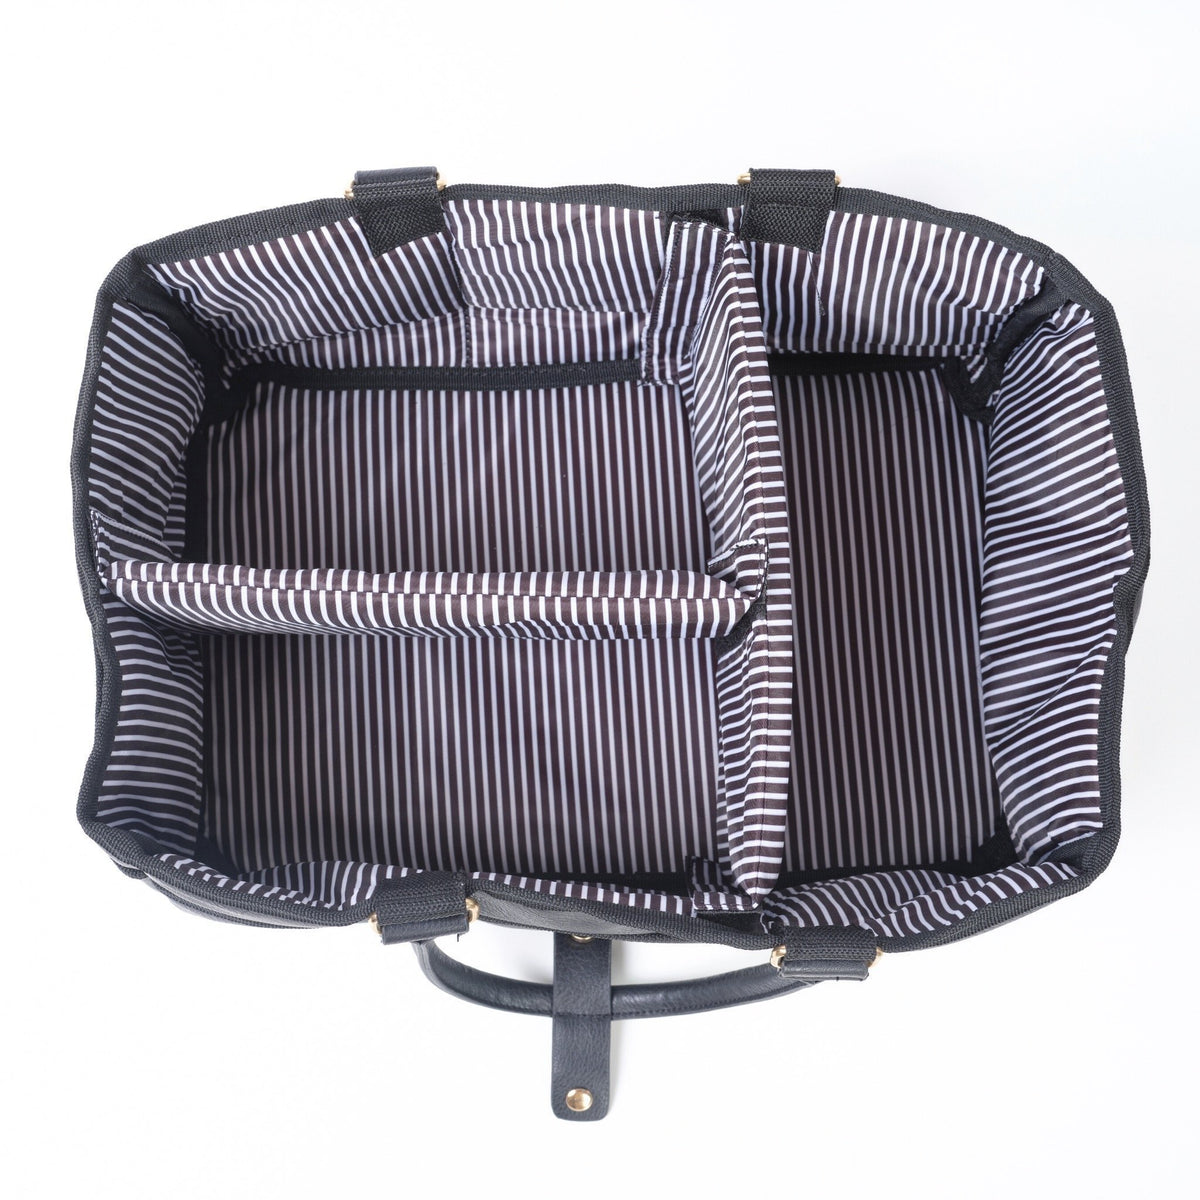 Diaper Caddy Vegan Leather - Sleepy Panda diaper bag backpack stroller straps changing pad